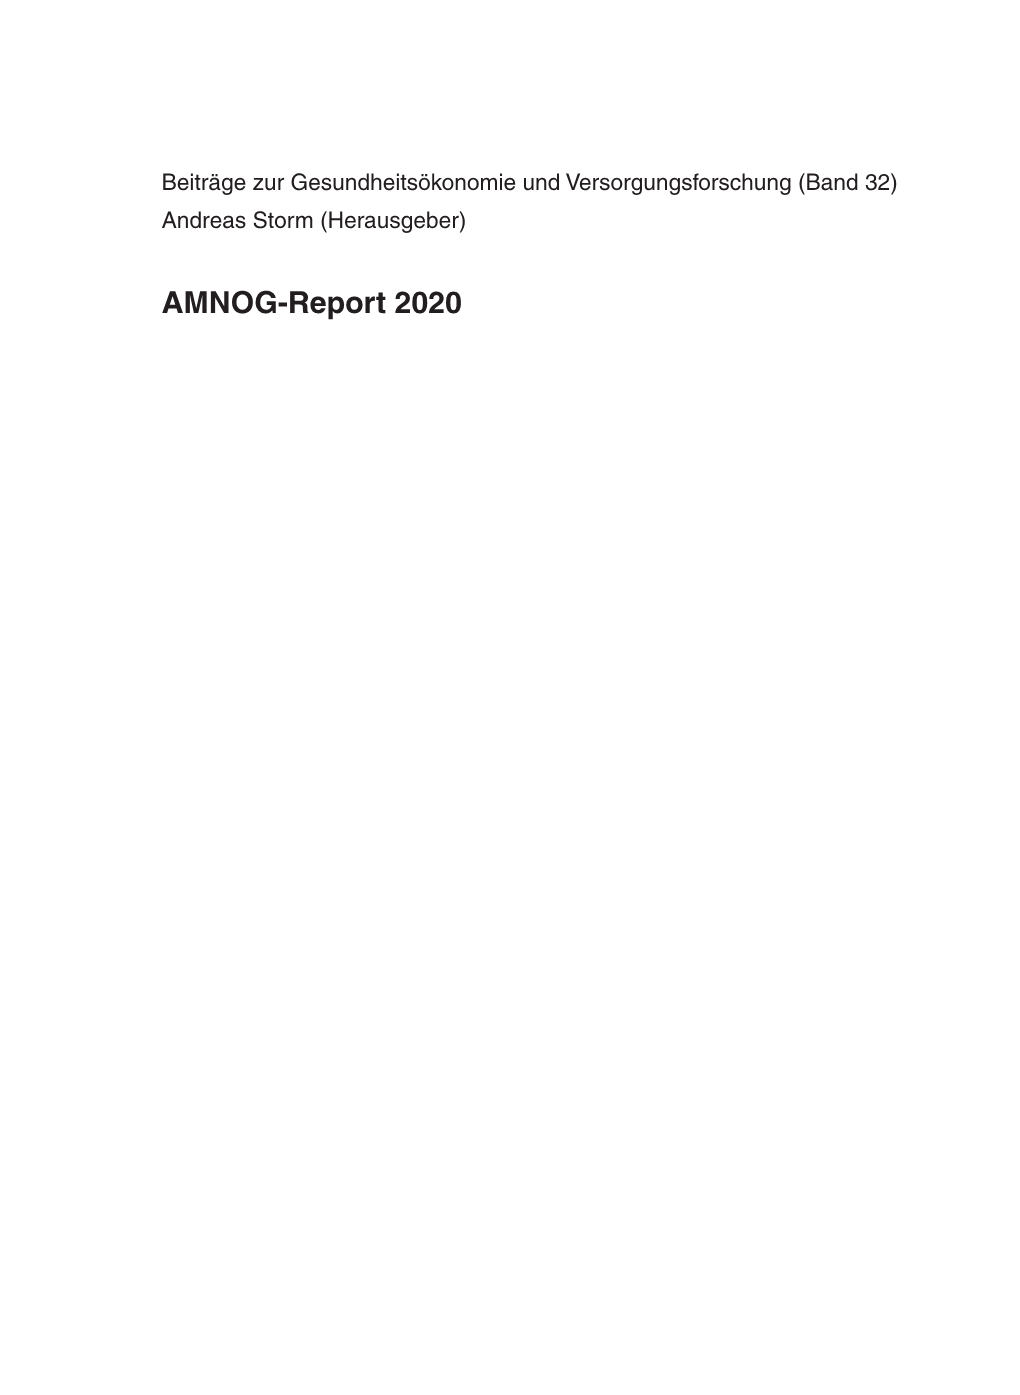 AMNOG-Report 2020